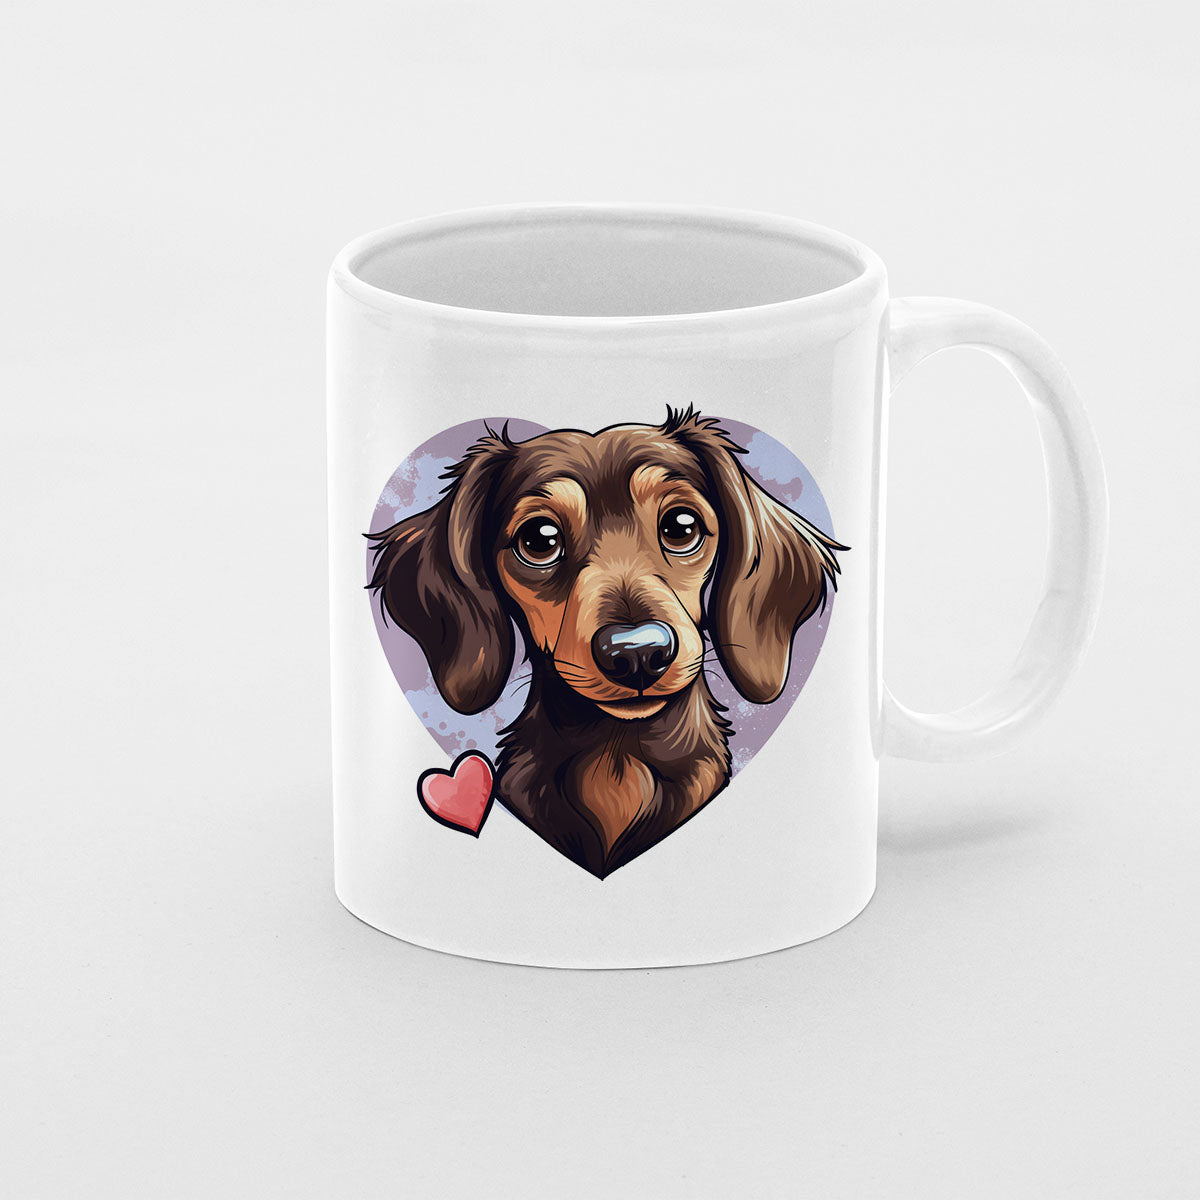 Custom Valentine's Day Dog Mug, Personalized Valentine's Day Gift for Dog Lover, Cute Dachshund Love Ceramic Mug, Dog Coffee Mugs, Personalized Pet Mugs, Cute Valentine Puppy Heart Ceramic Mug, Valentines Gift